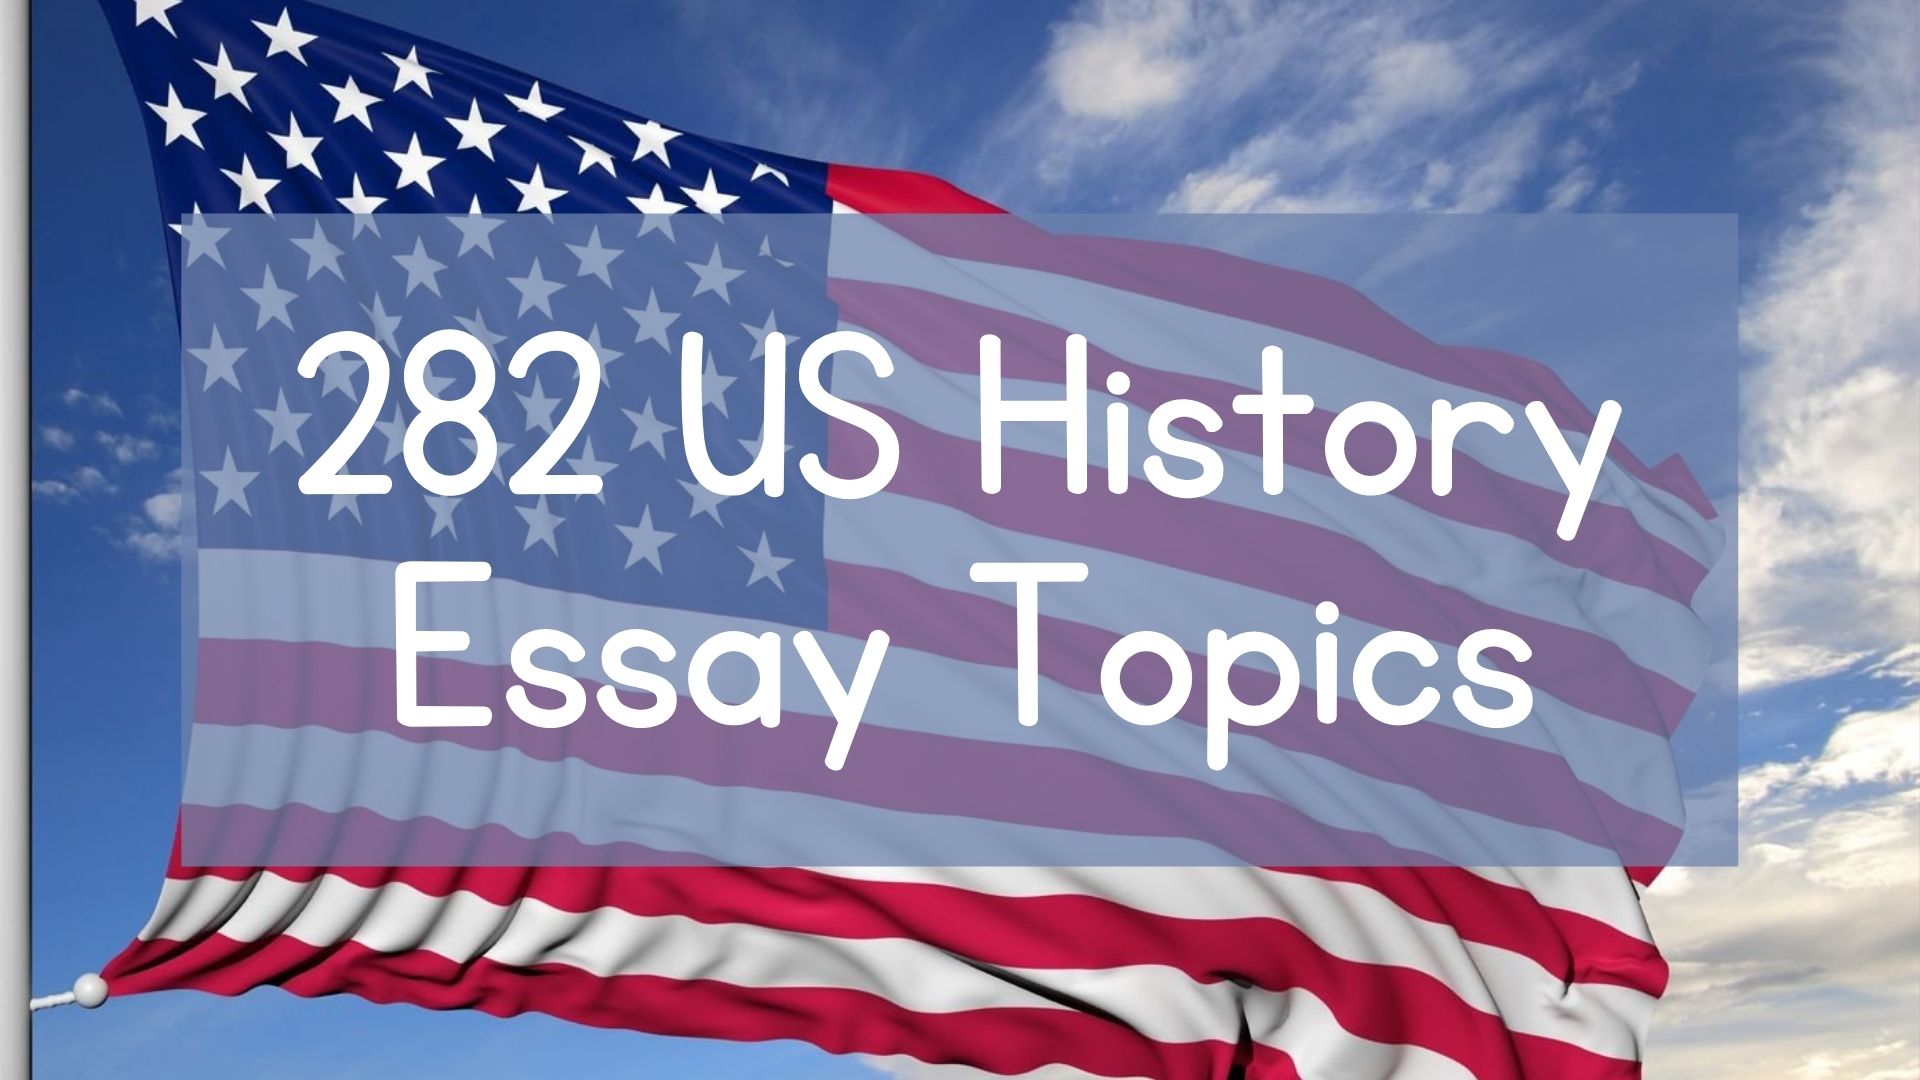 282 US History Essay Topics For Students and Historians